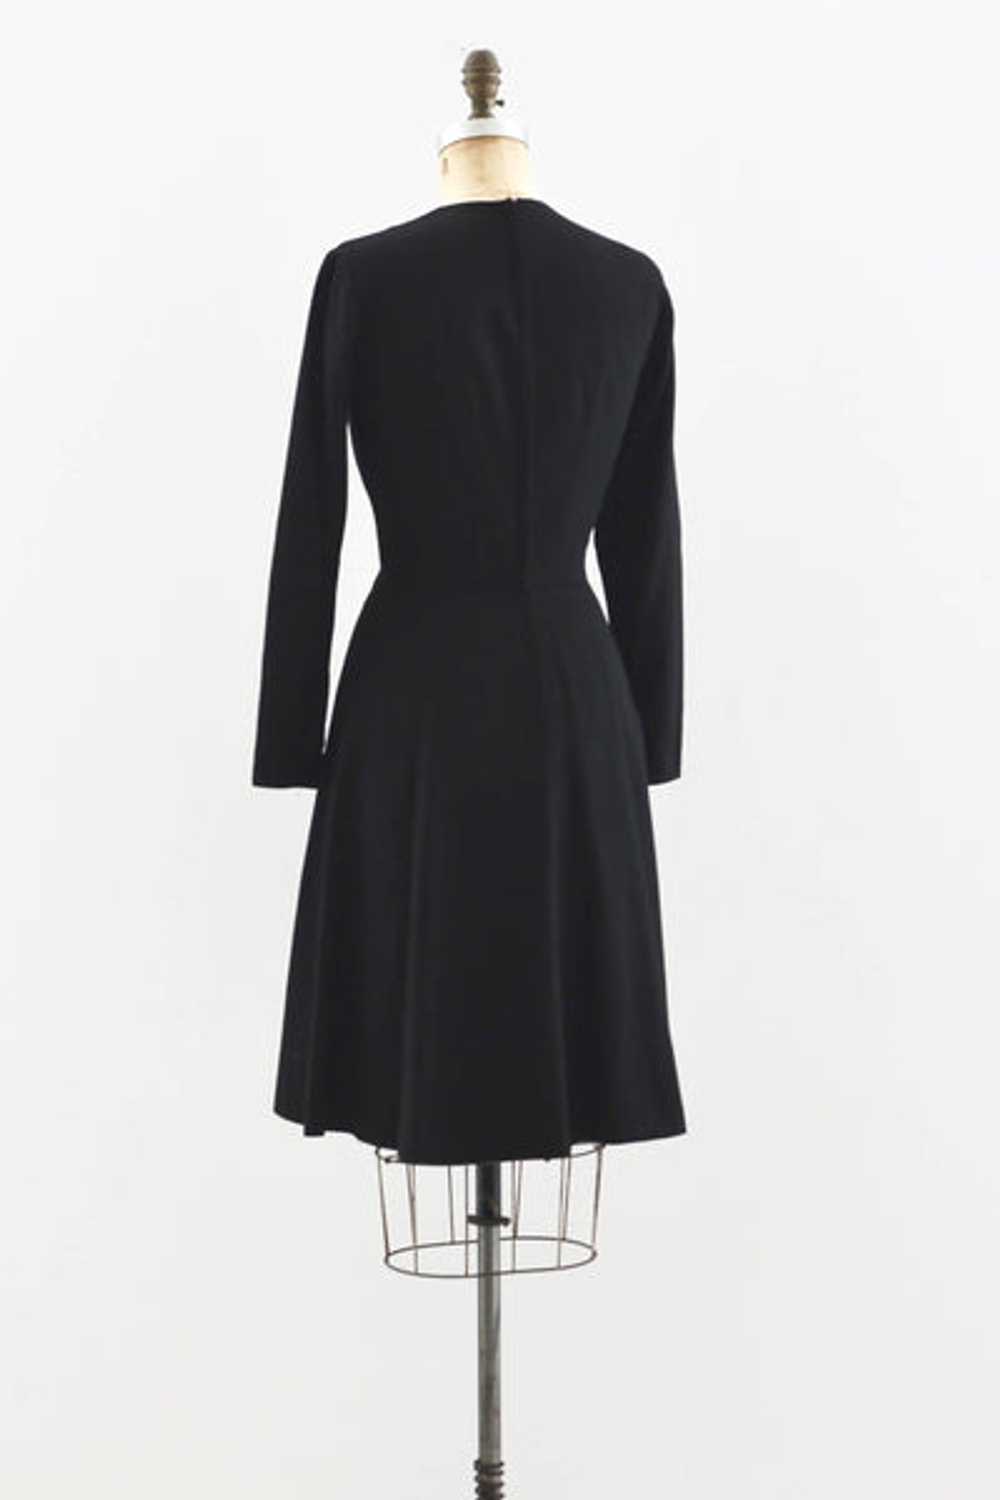 Neiman Marcus Wool Dress - image 6